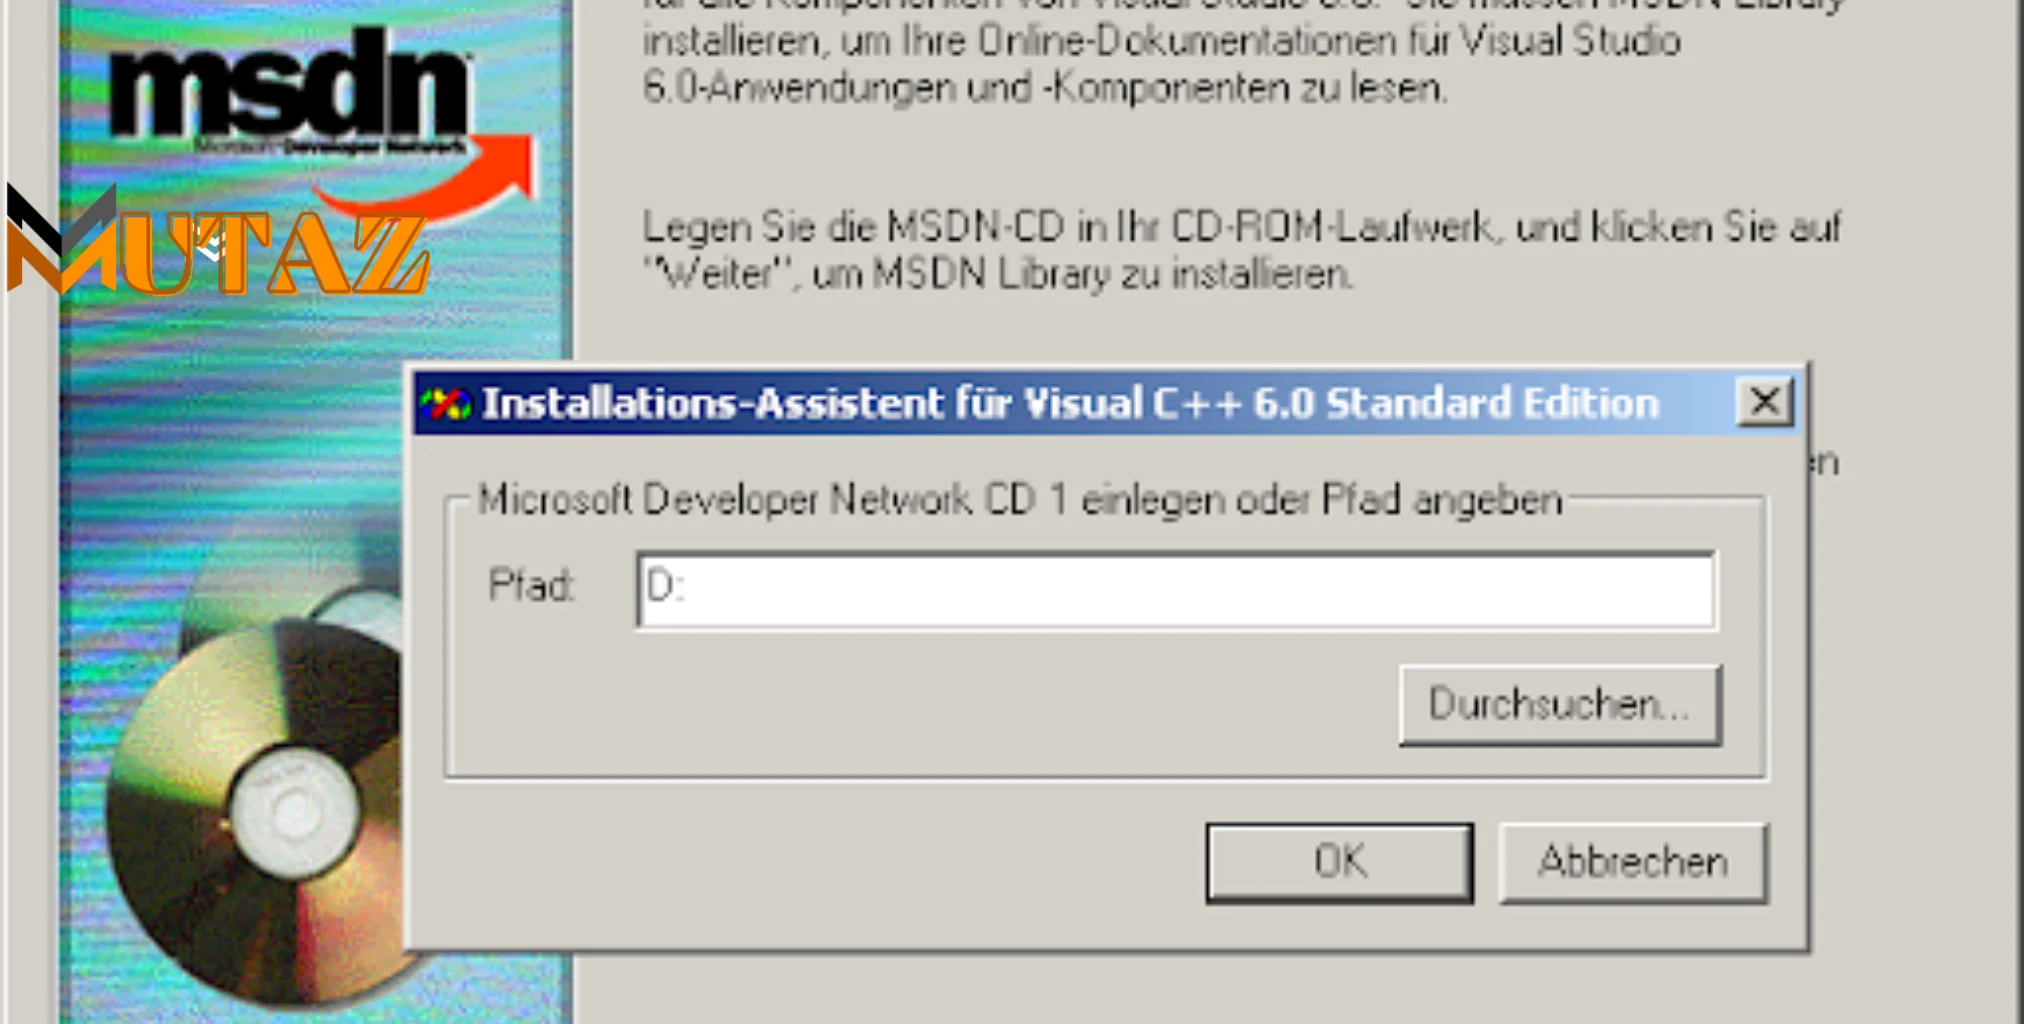 Microsoft Visual Studio MSDN Library for 6.0a